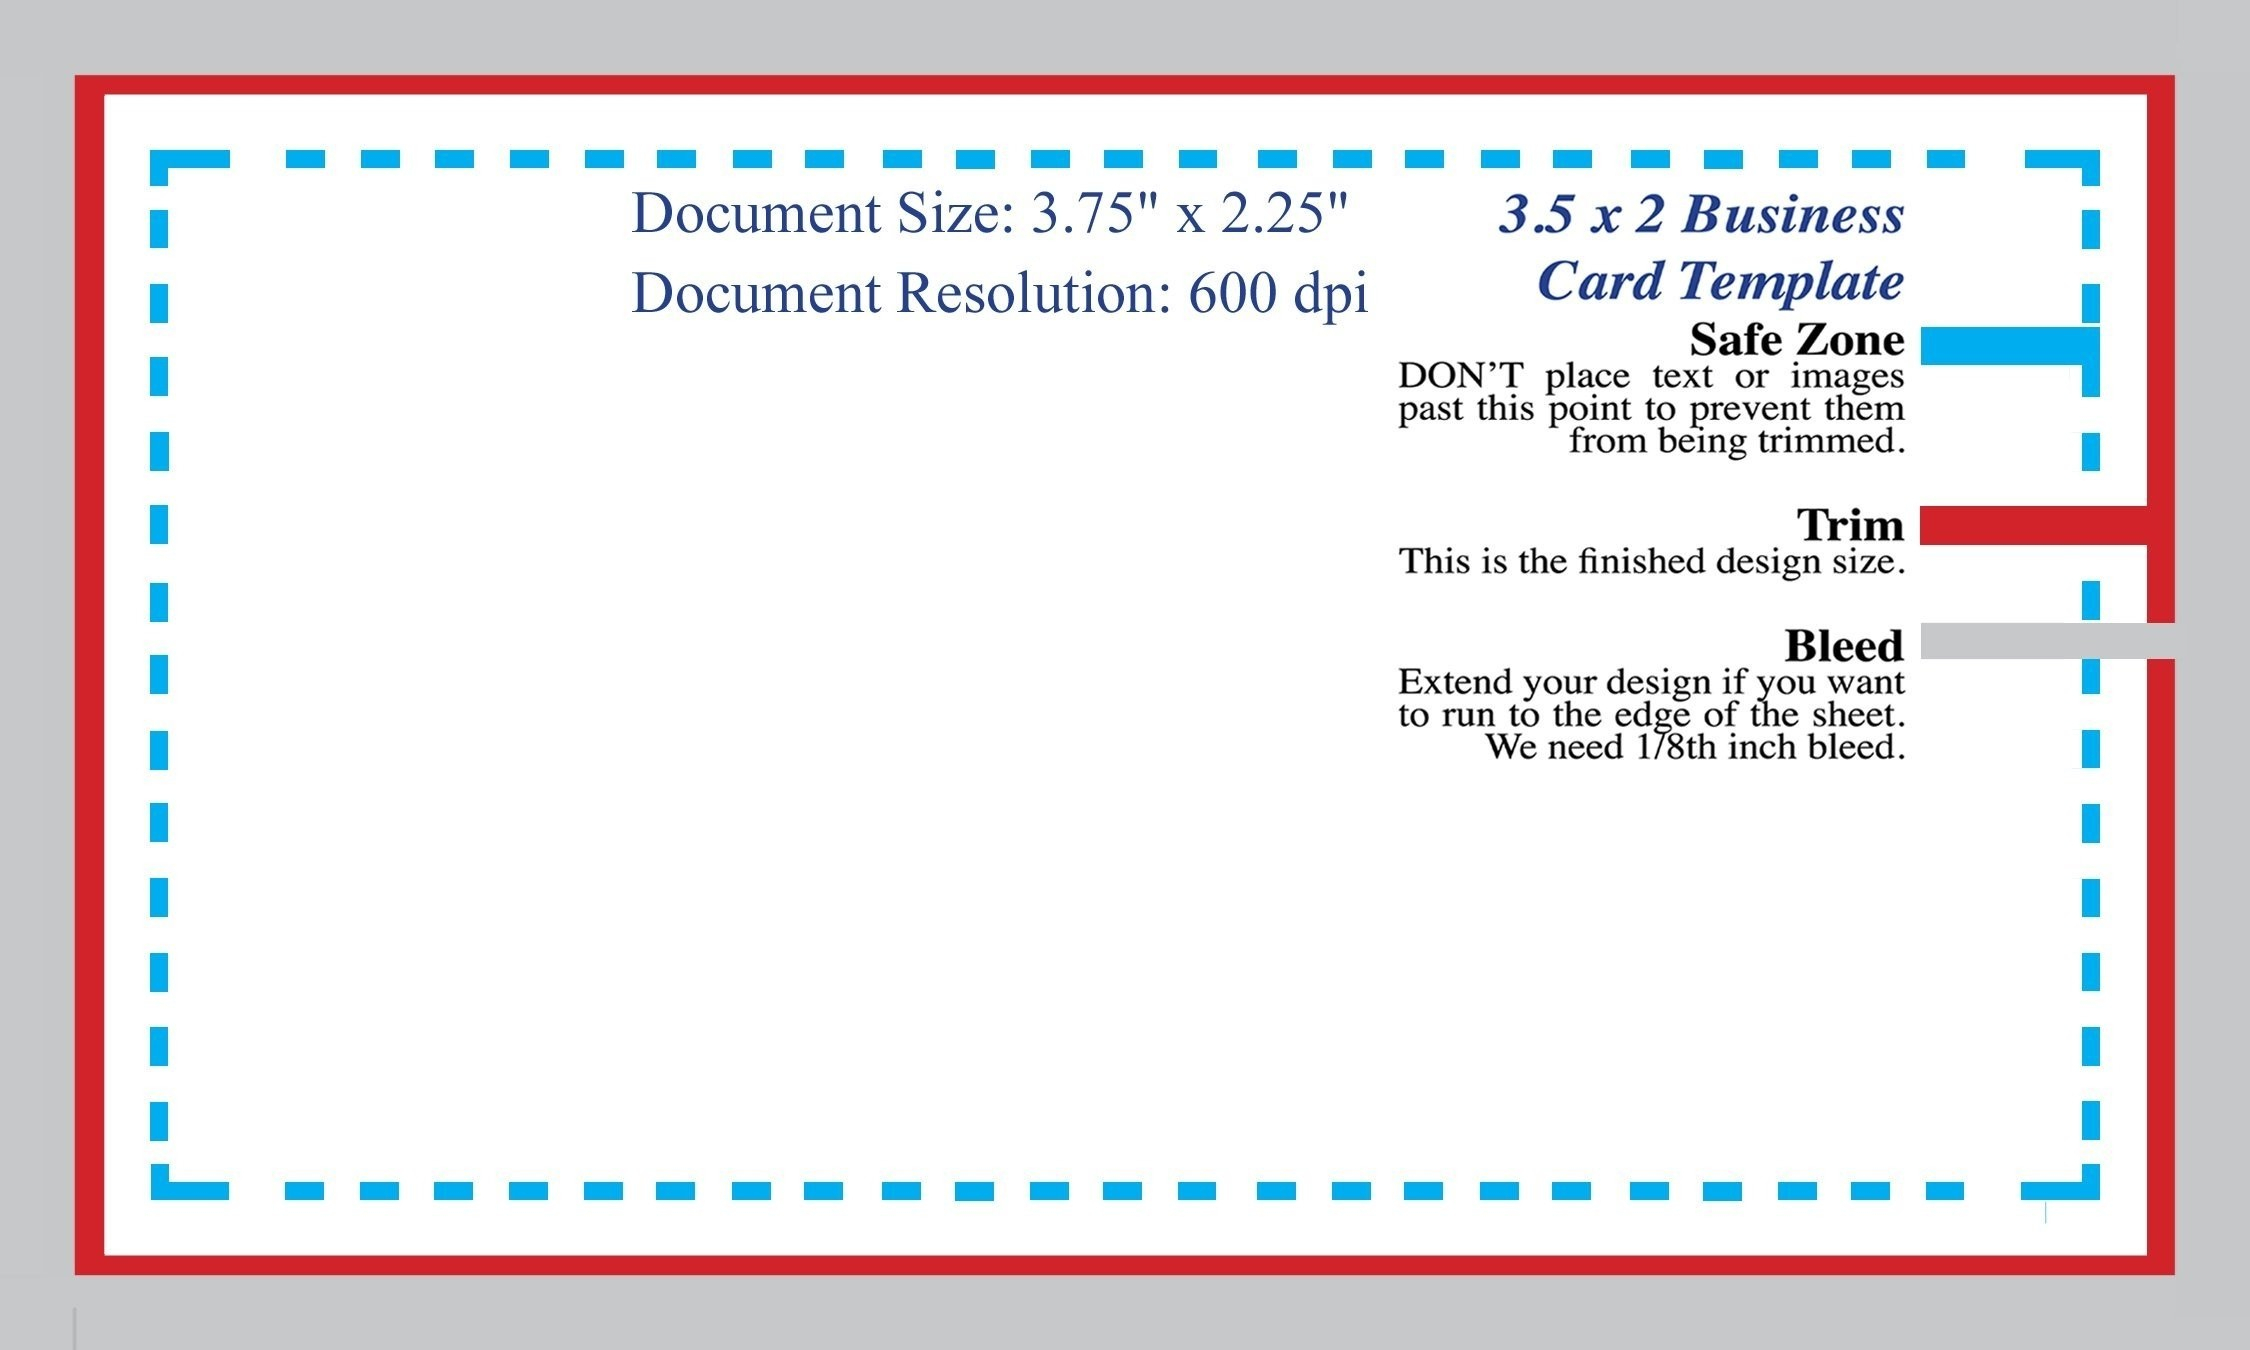 Business Card Template In Photoshop Regarding Business Card Template Size Photoshop